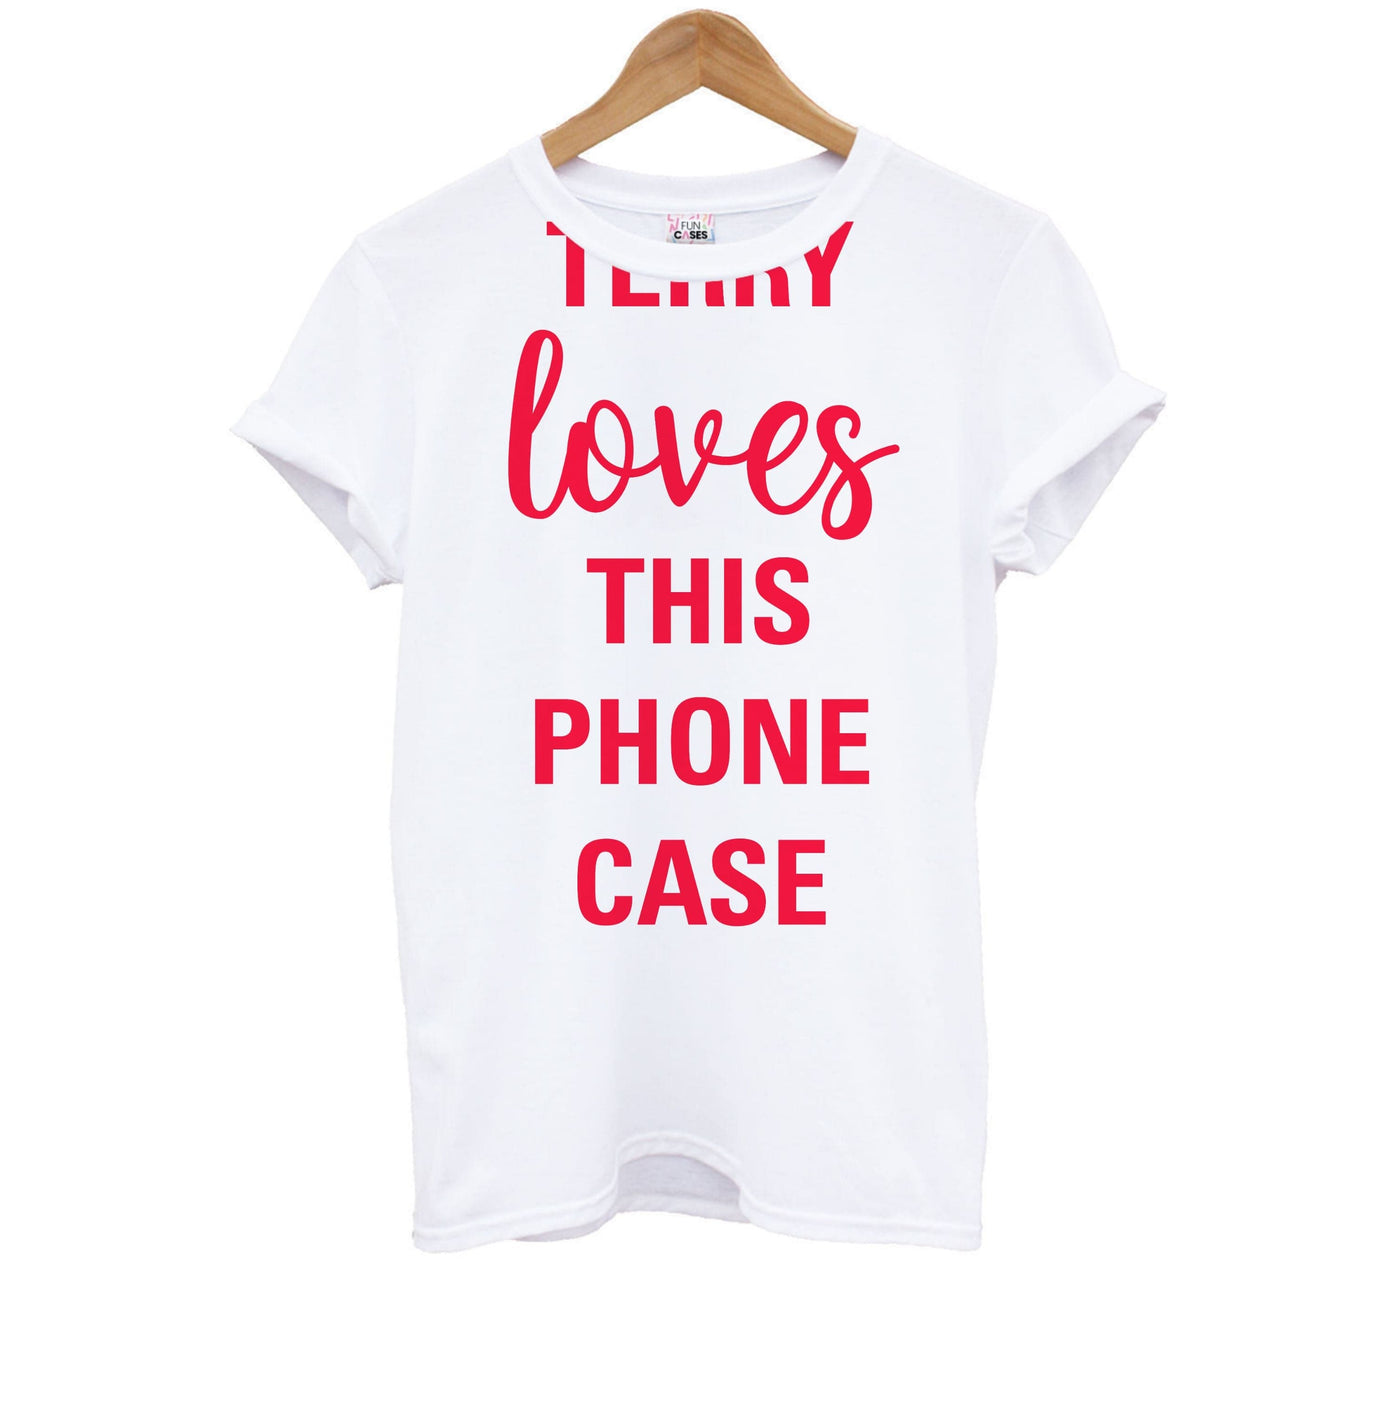 Terry Loves This Phone Case - Brooklyn Nine-Nine Kids T-Shirt